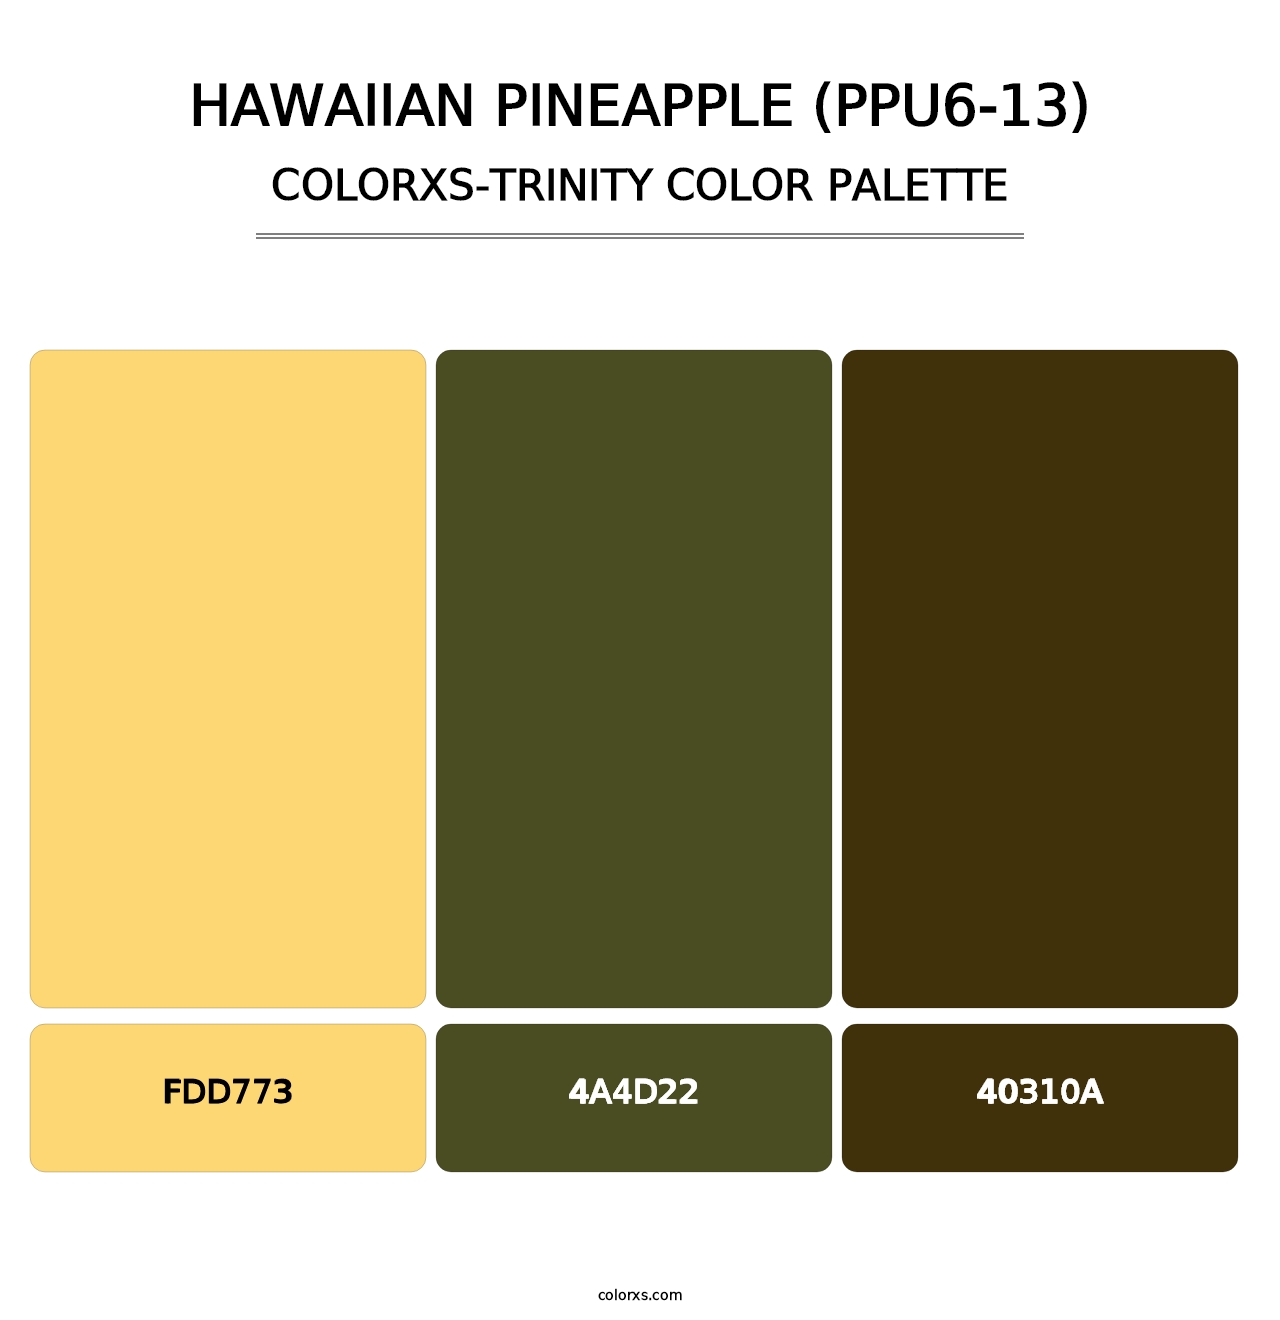 Hawaiian Pineapple (PPU6-13) - Colorxs Trinity Palette